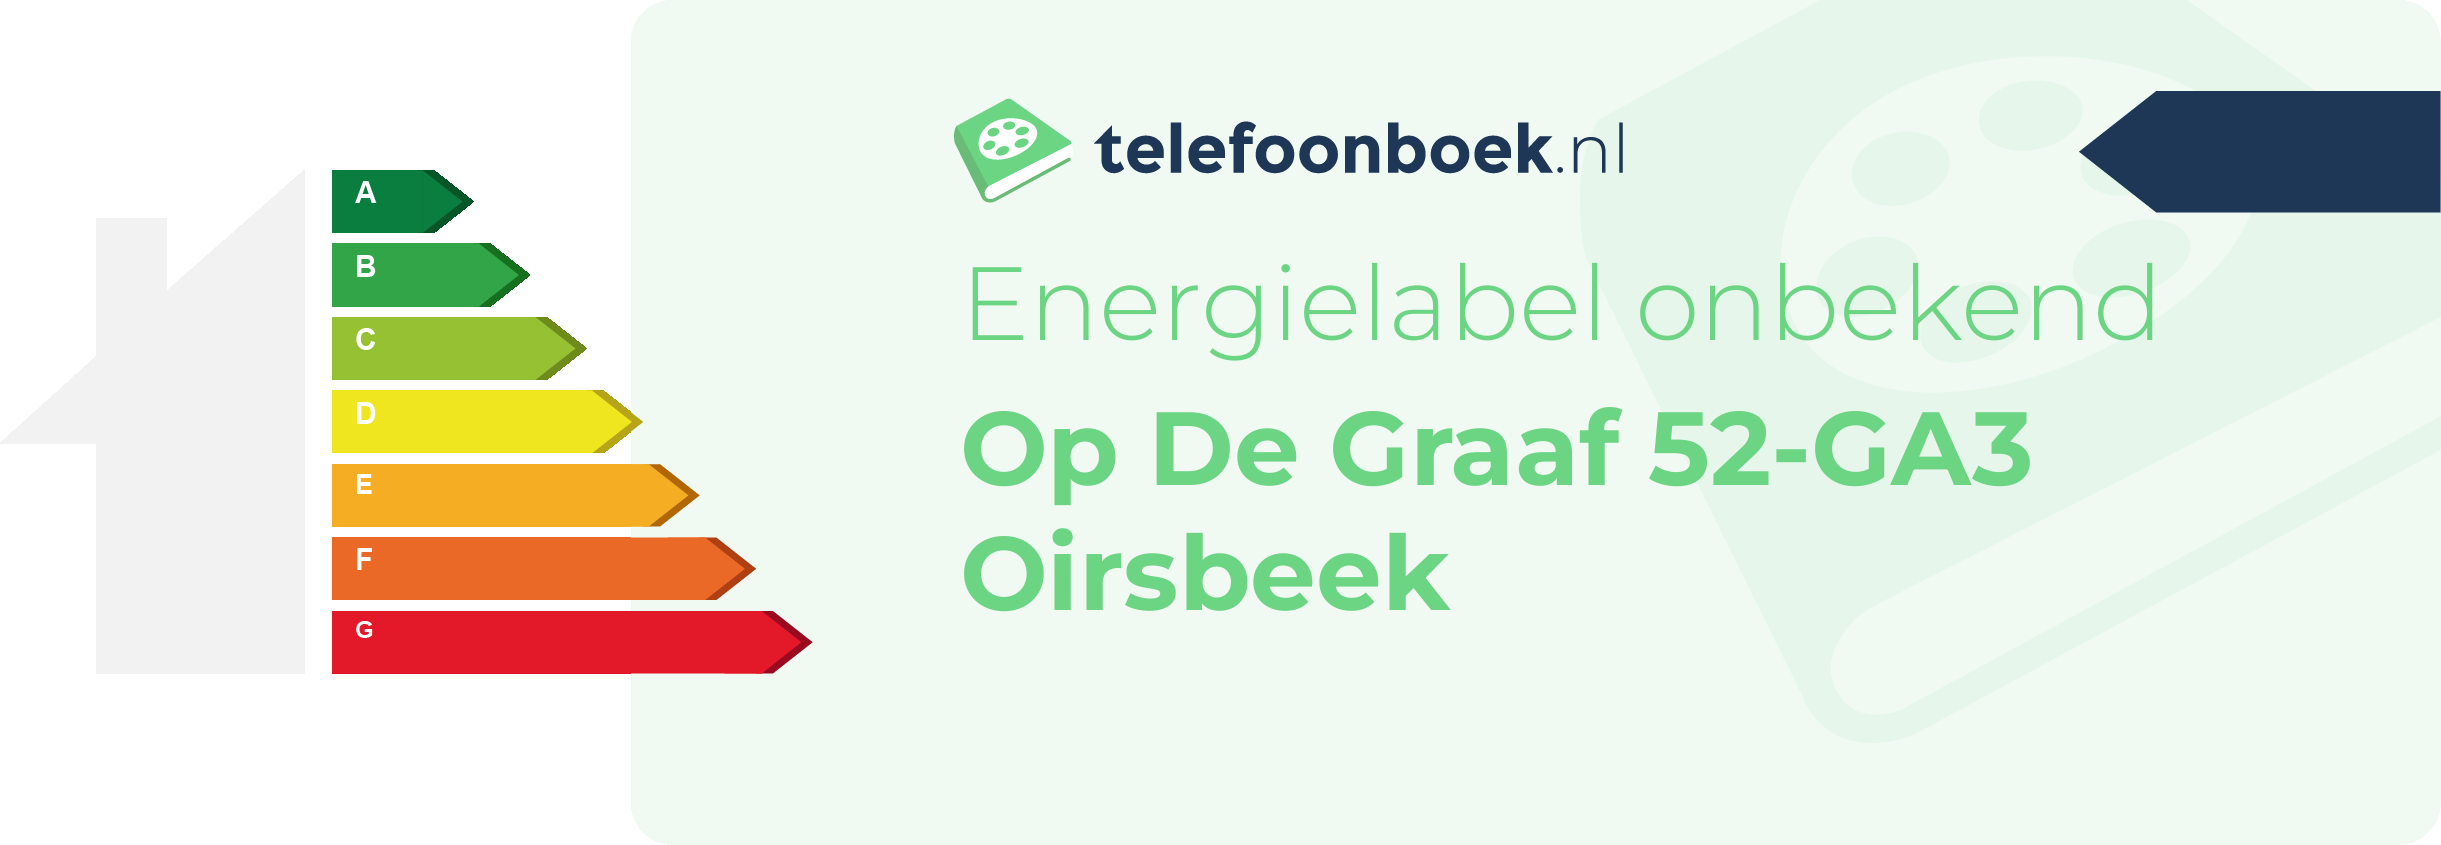 Energielabel Op De Graaf 52-GA3 Oirsbeek